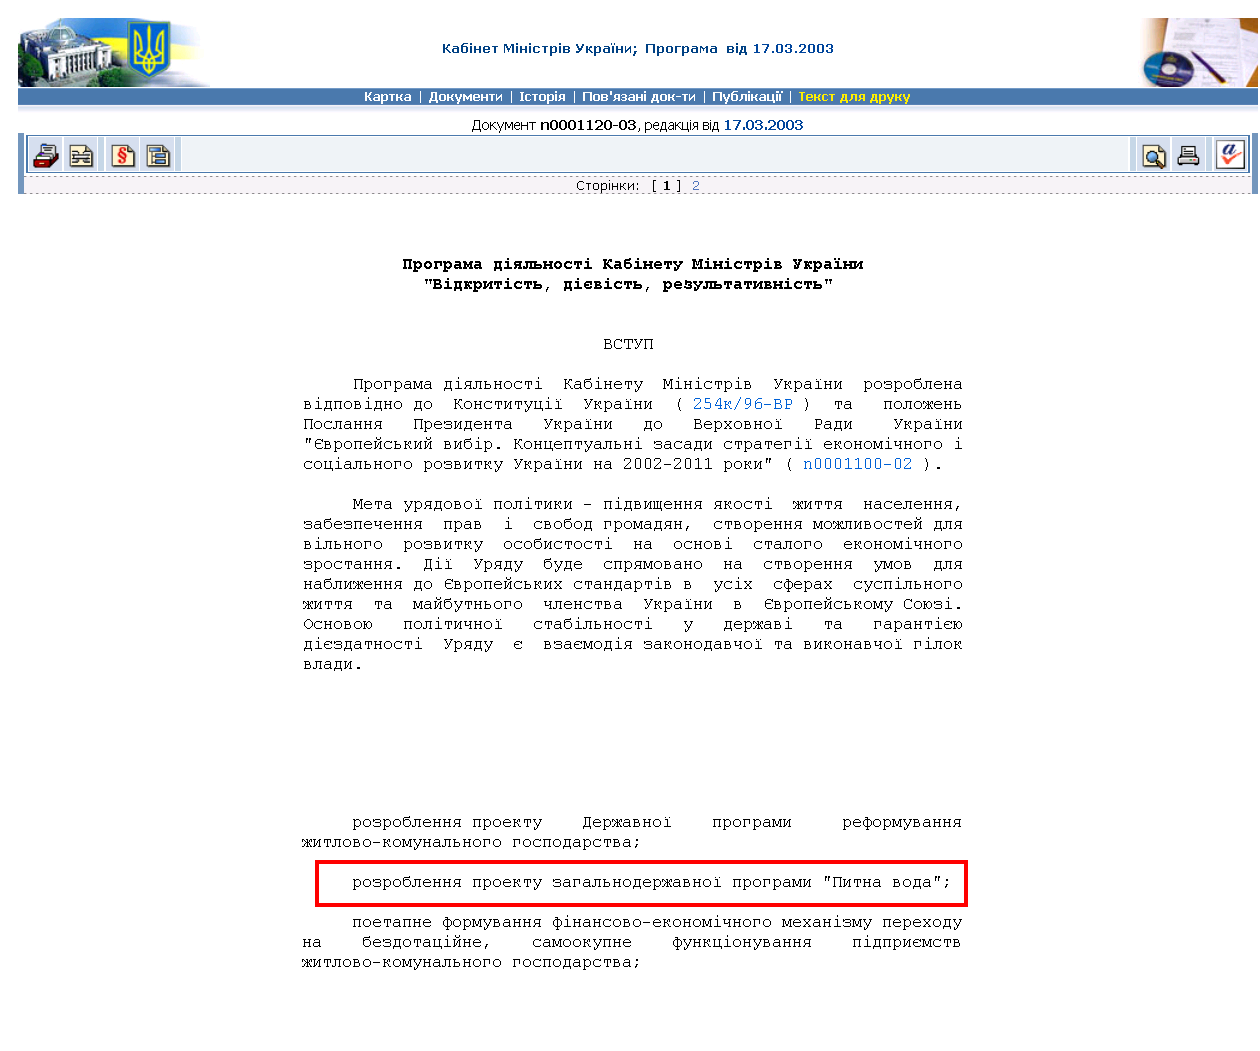 http://zakon.rada.gov.ua/cgi-bin/laws/main.cgi?page=2&nreg=n0001120-03